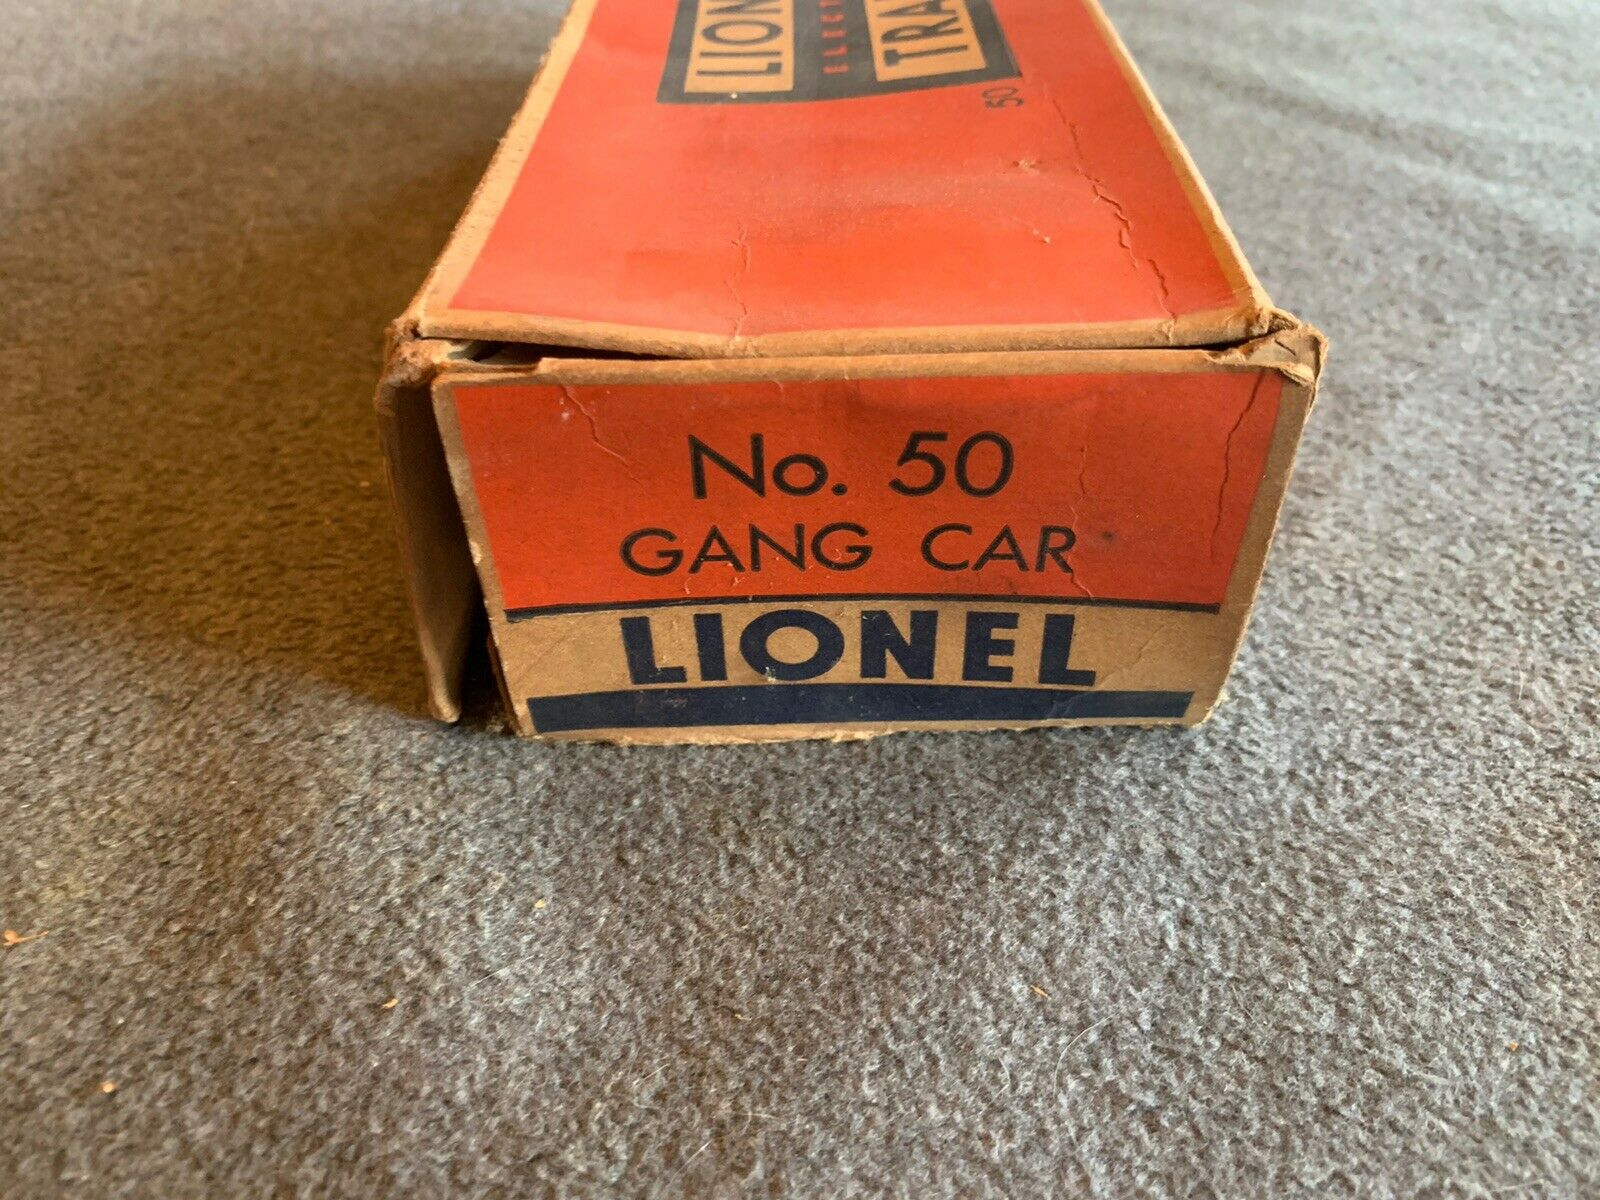 Lionel 50 Gang Car Box - Empty Box - Vintage